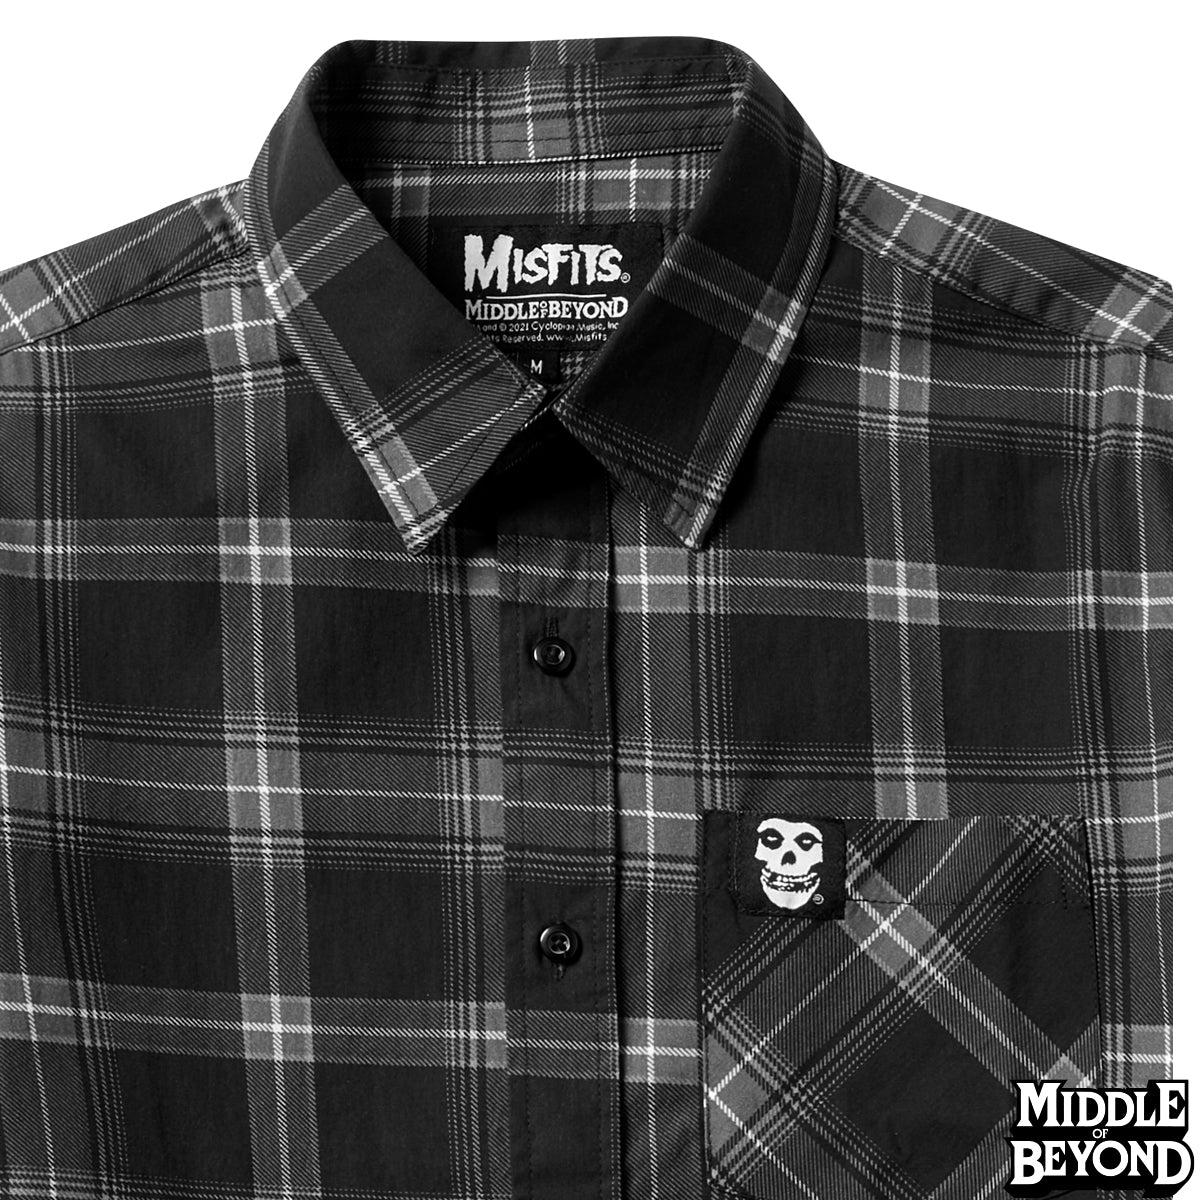 Halloween Short Sleeve Button-Up Shirt Version 1 – Middle of Beyond